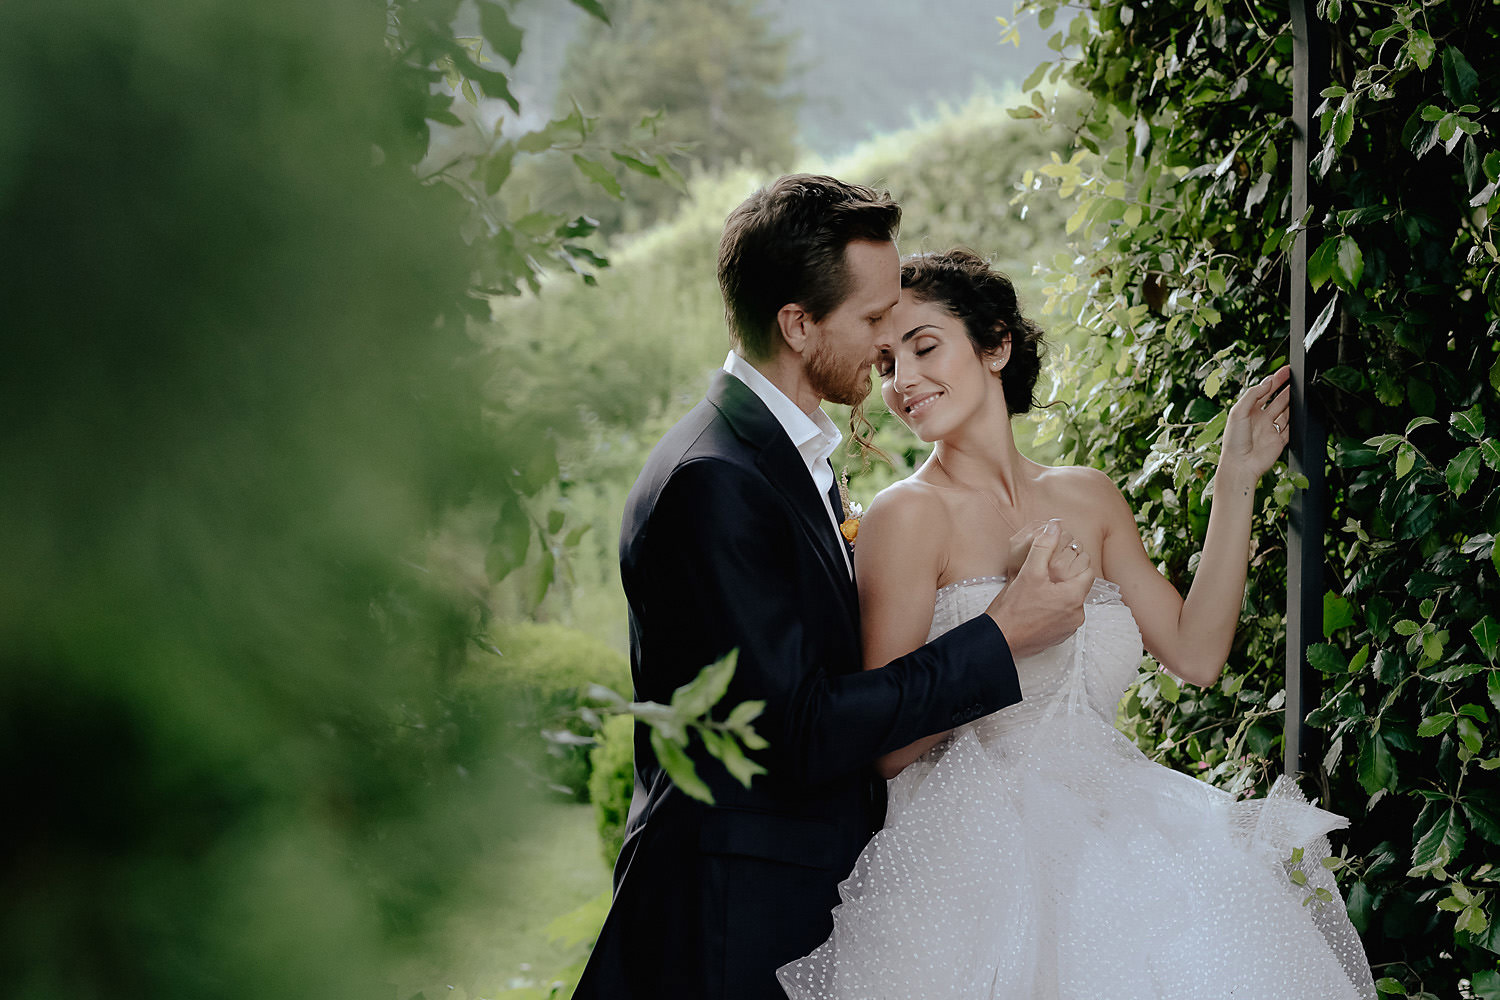 villa balbiano wedding photographer lake como bride groom intimate romantic portraits